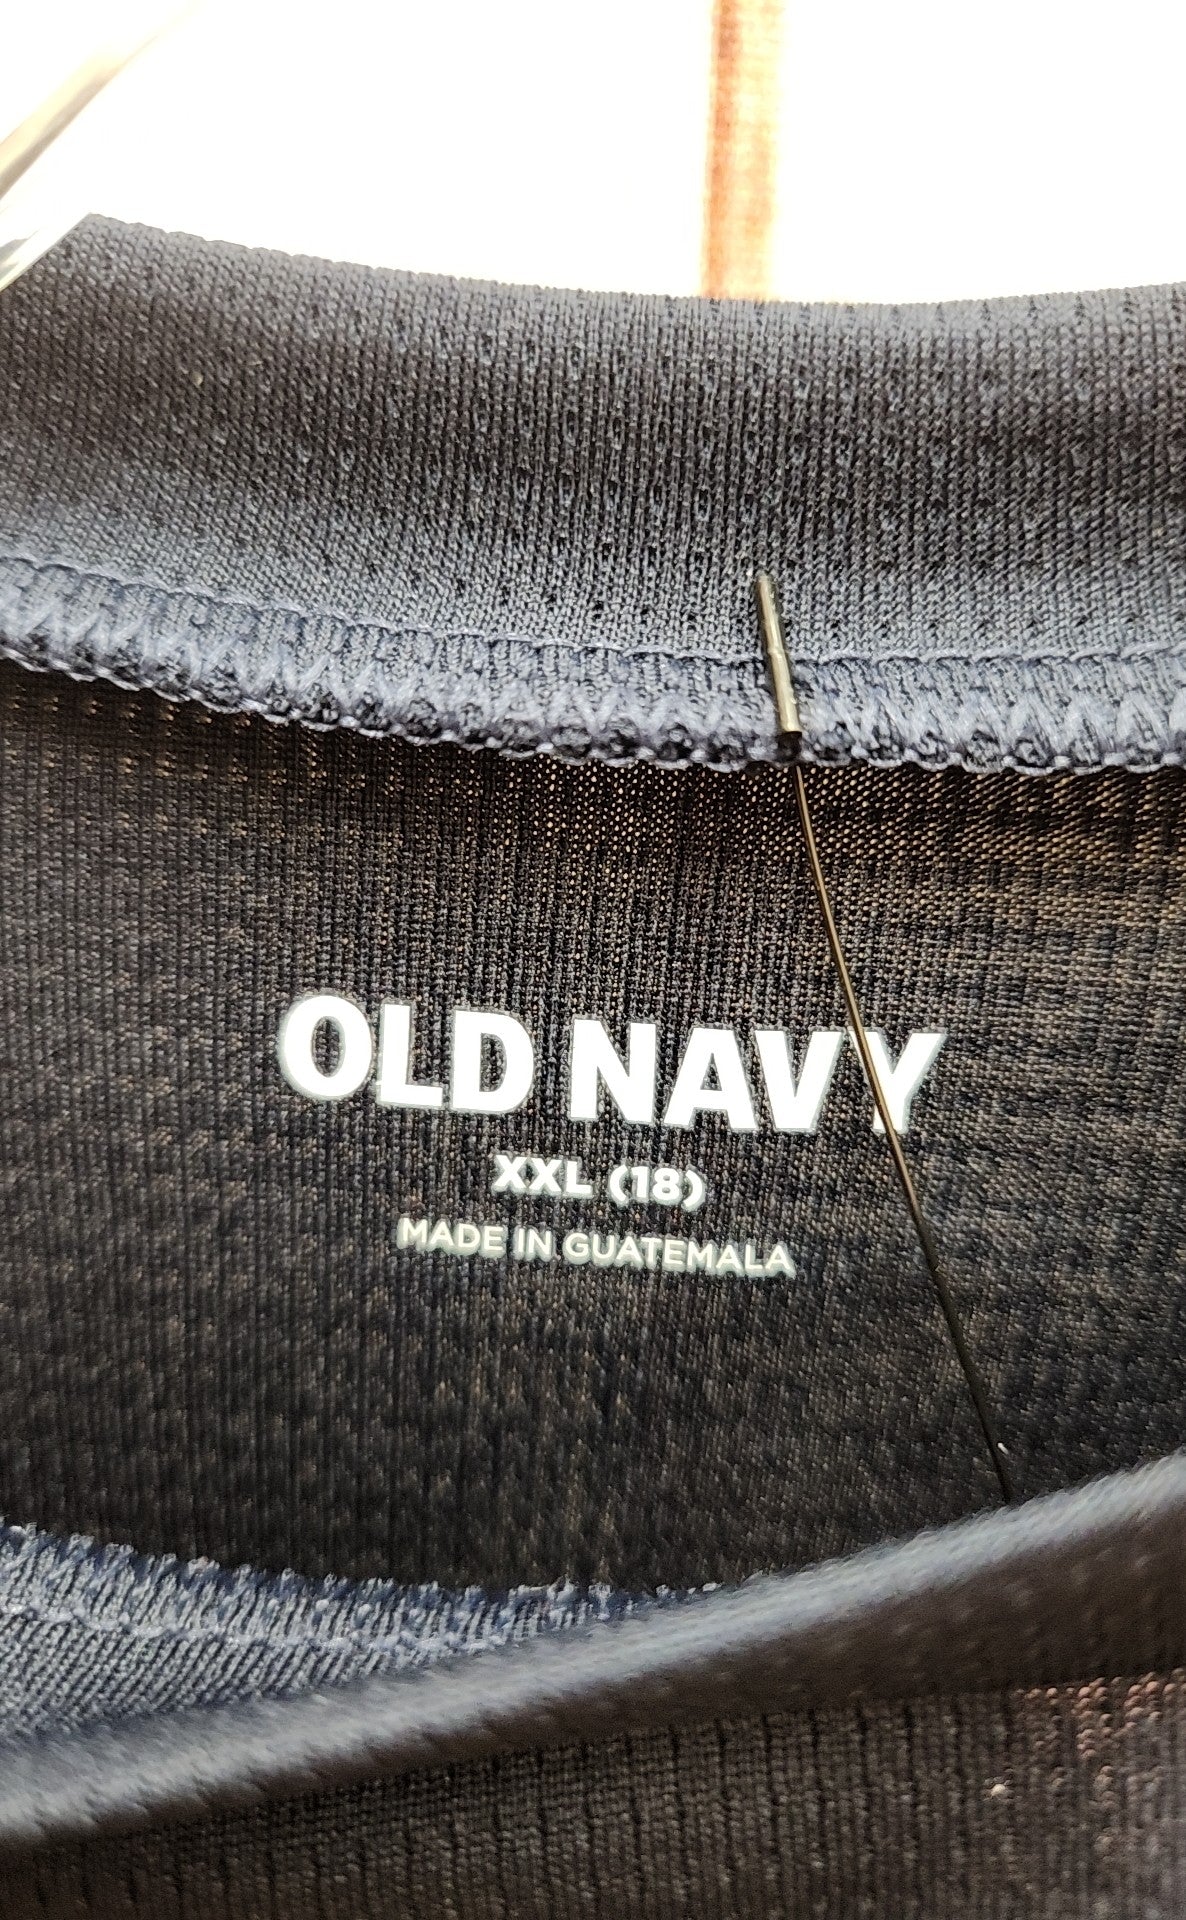 Old Navy Boy's Size 18 Navy Shirt